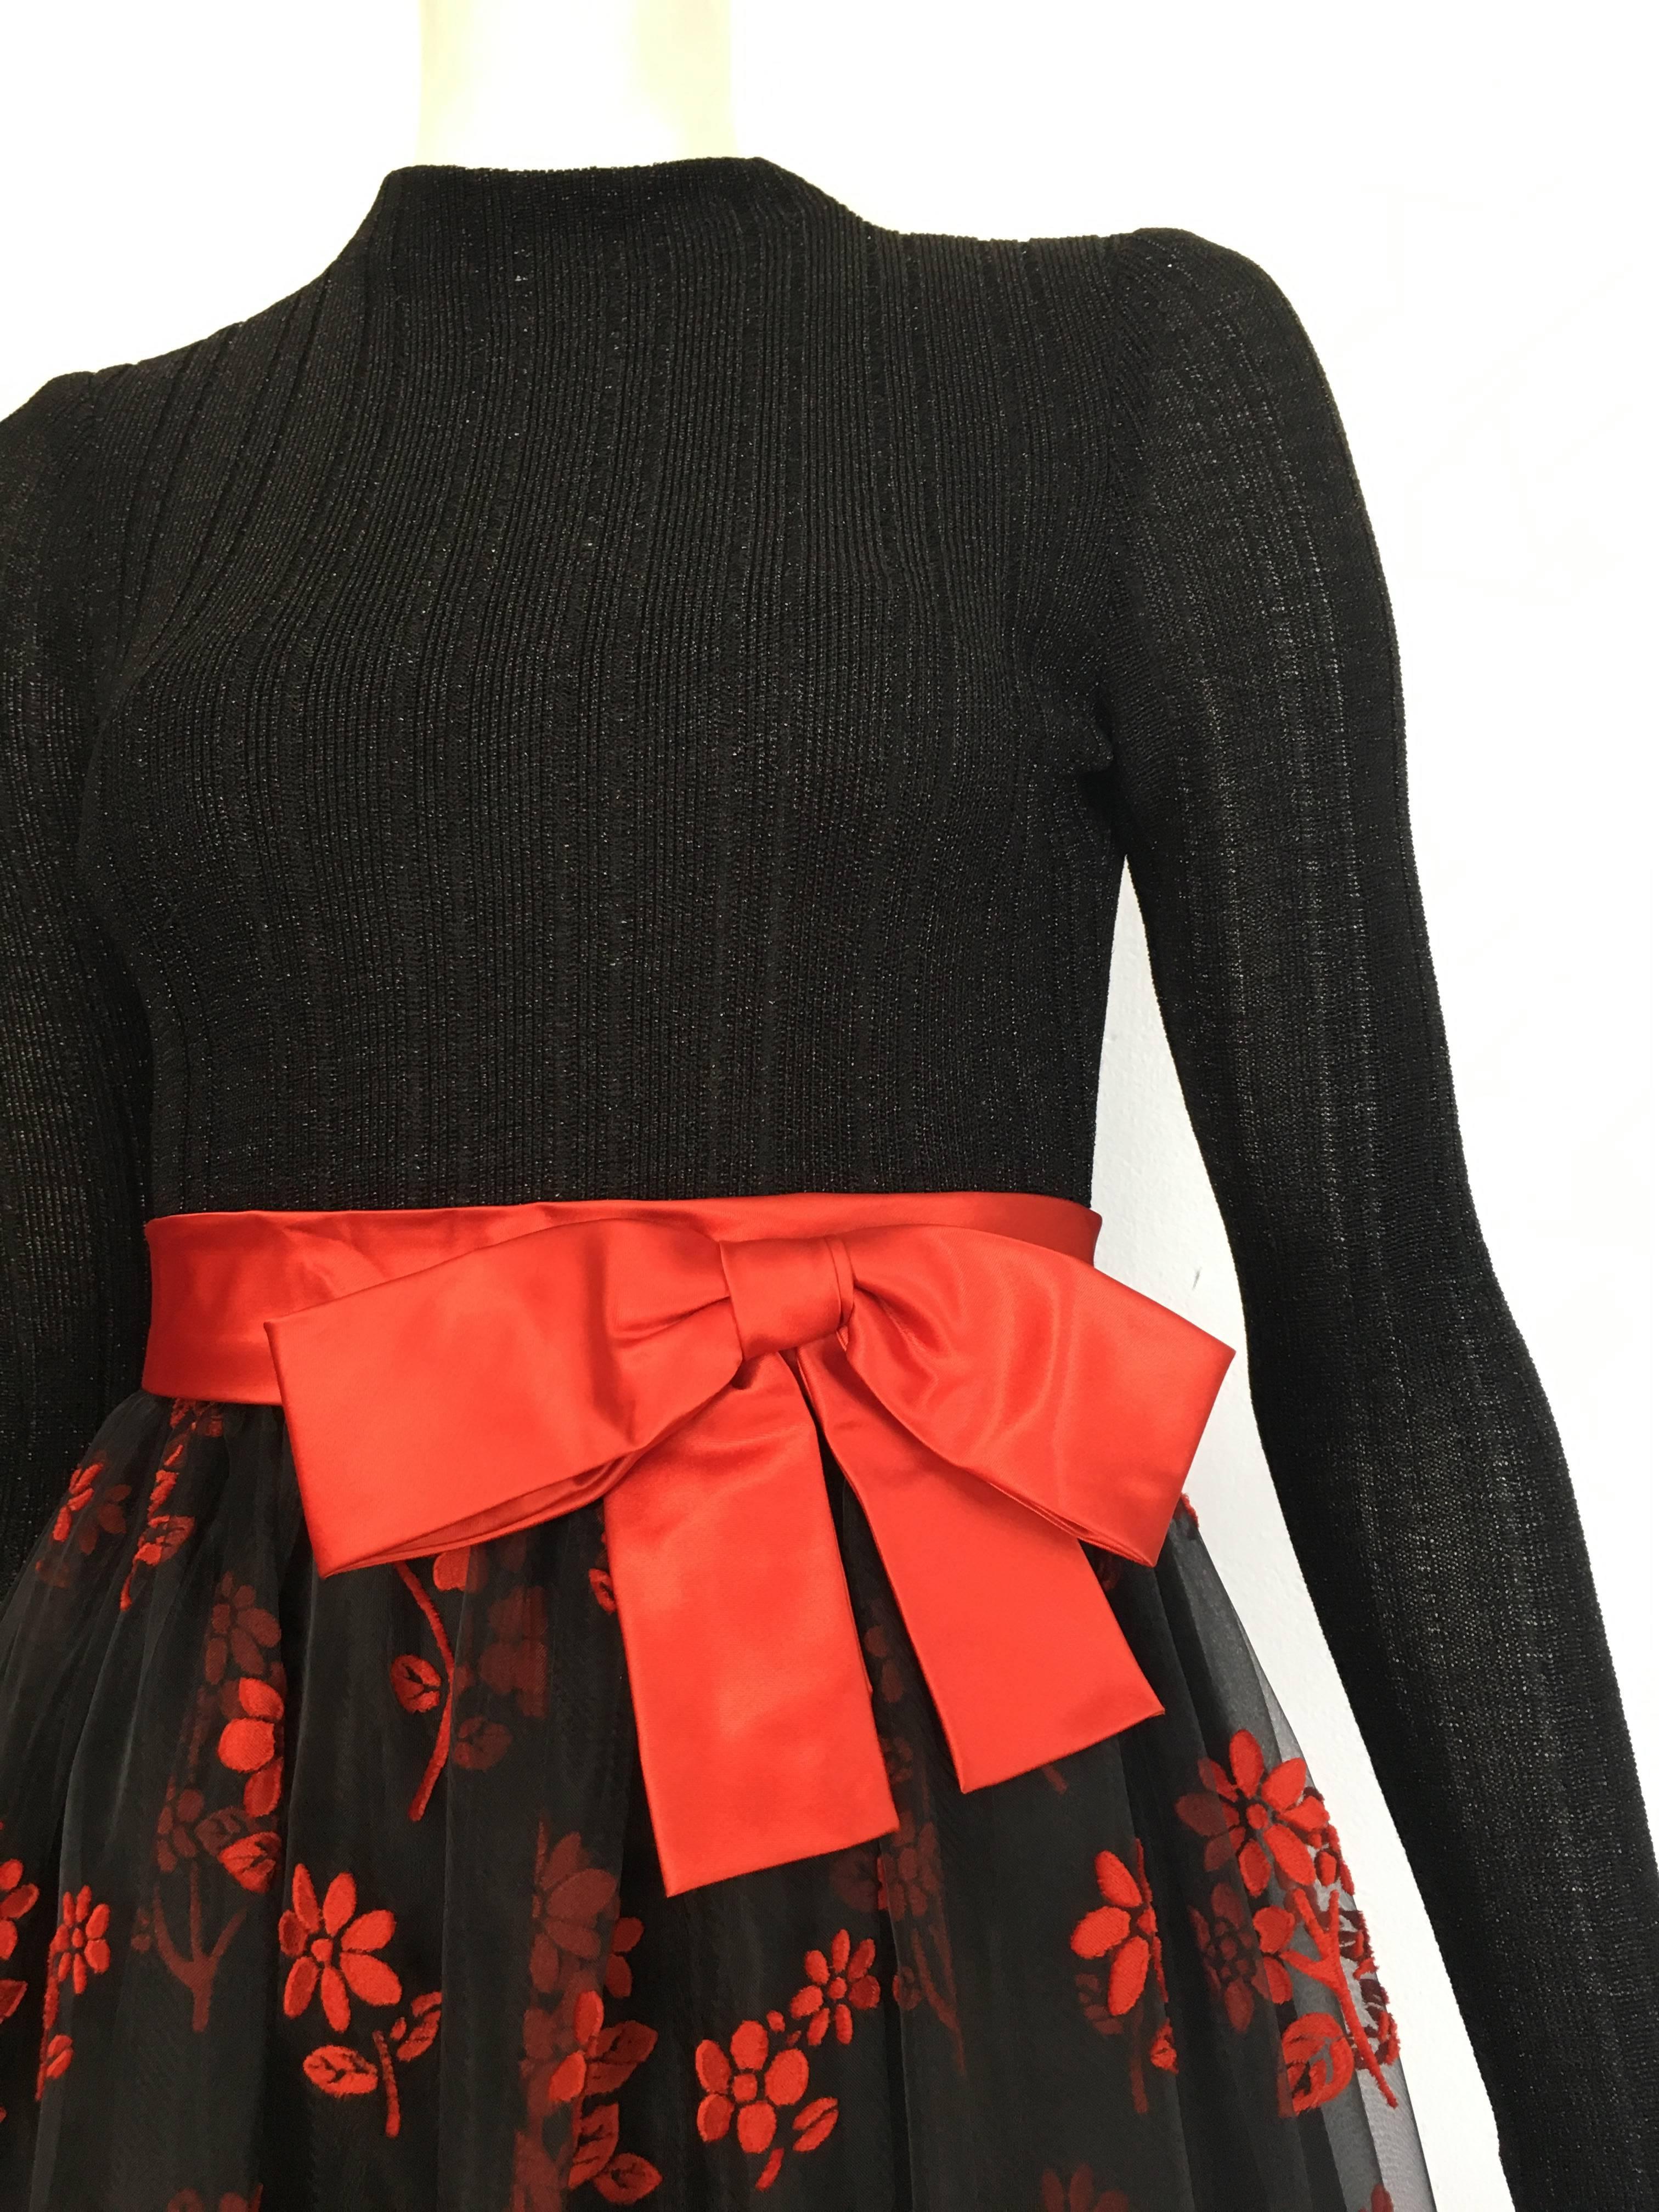 Huey Waltzer 1970s Black Long Sleeve Maxi Evening Dress Size 4. For Sale 3